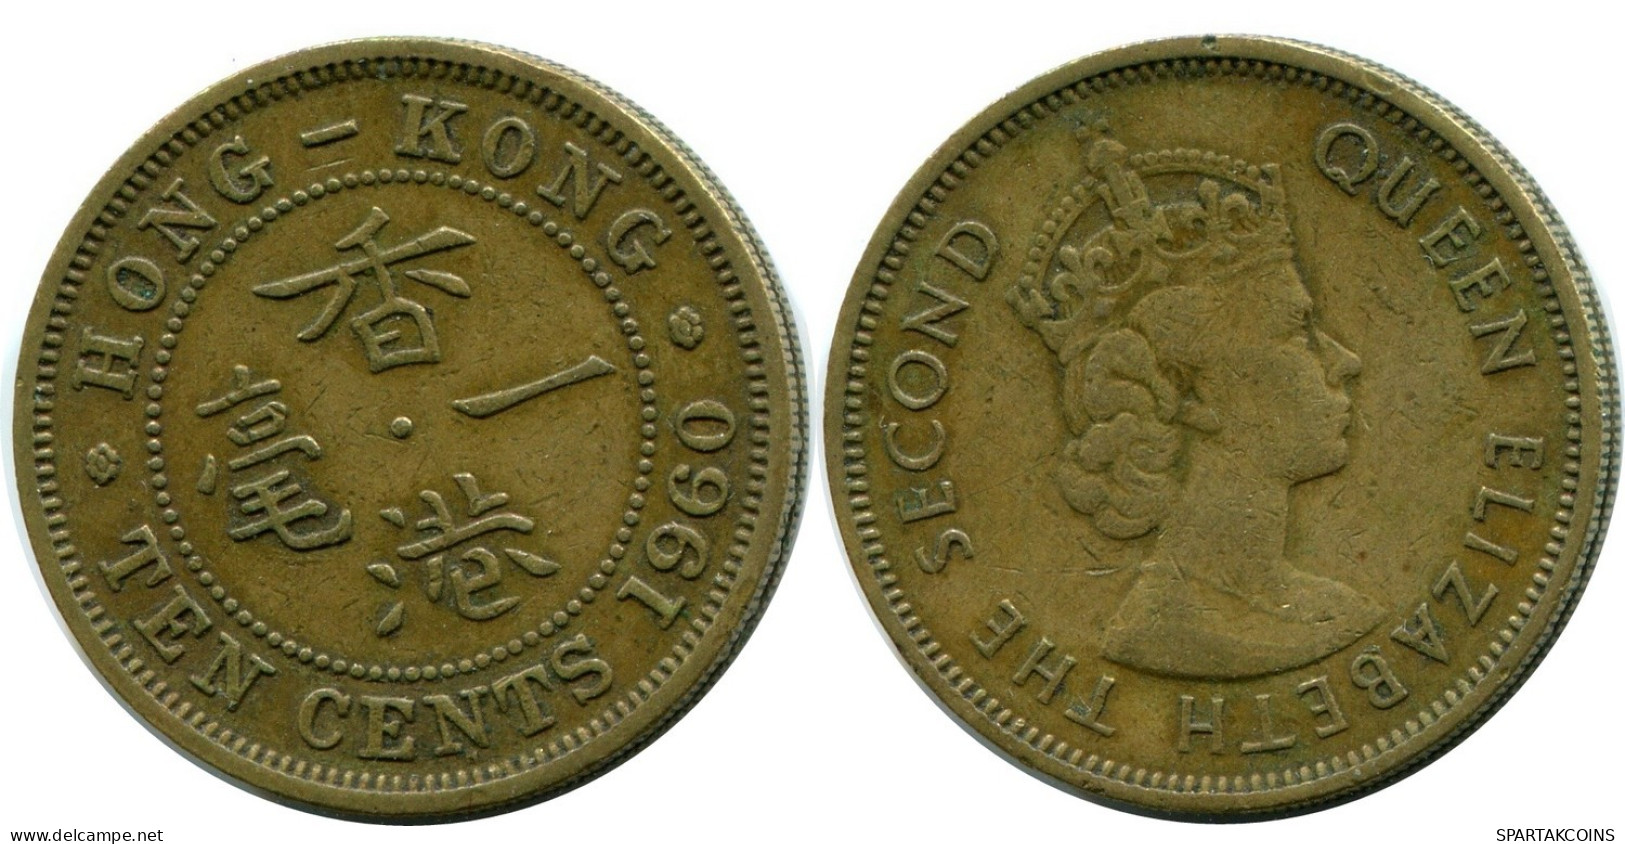 10 CENTS 1960 HONG KONG Moneda #AY600.E.A - Hongkong